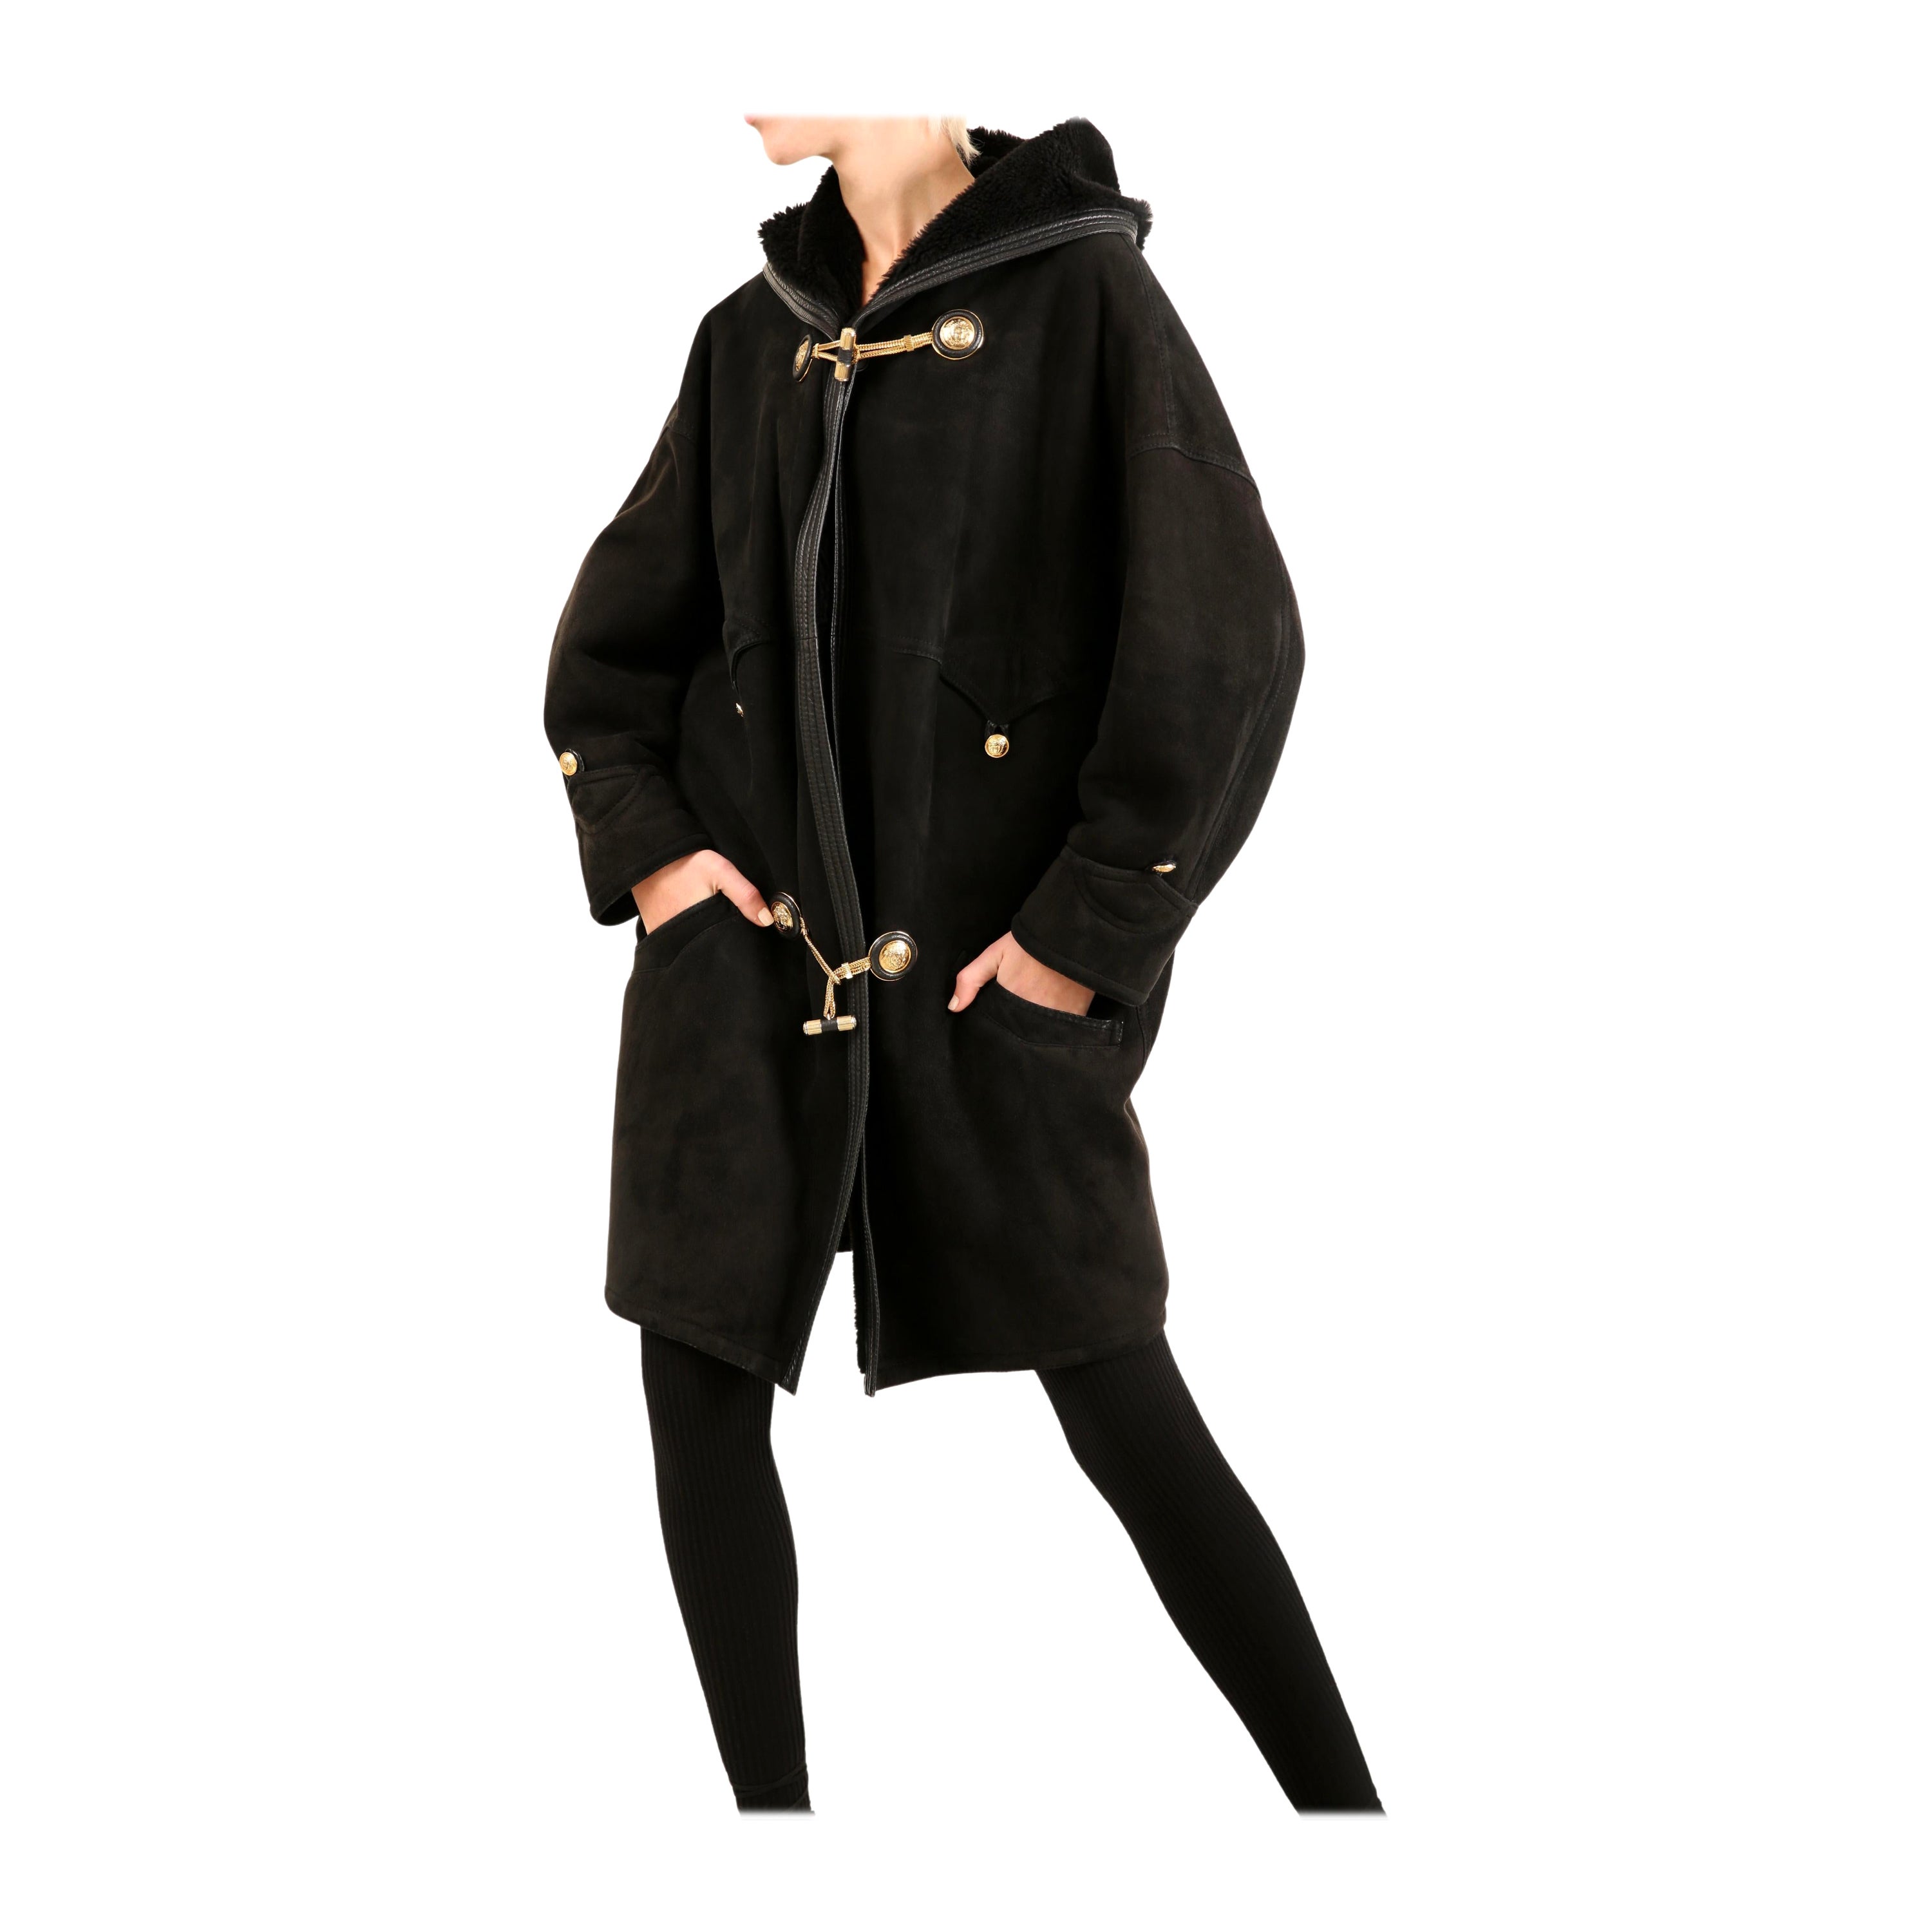 Gianni Versace 90's XS - L black leather suede shearling bondage coat jacket For Sale